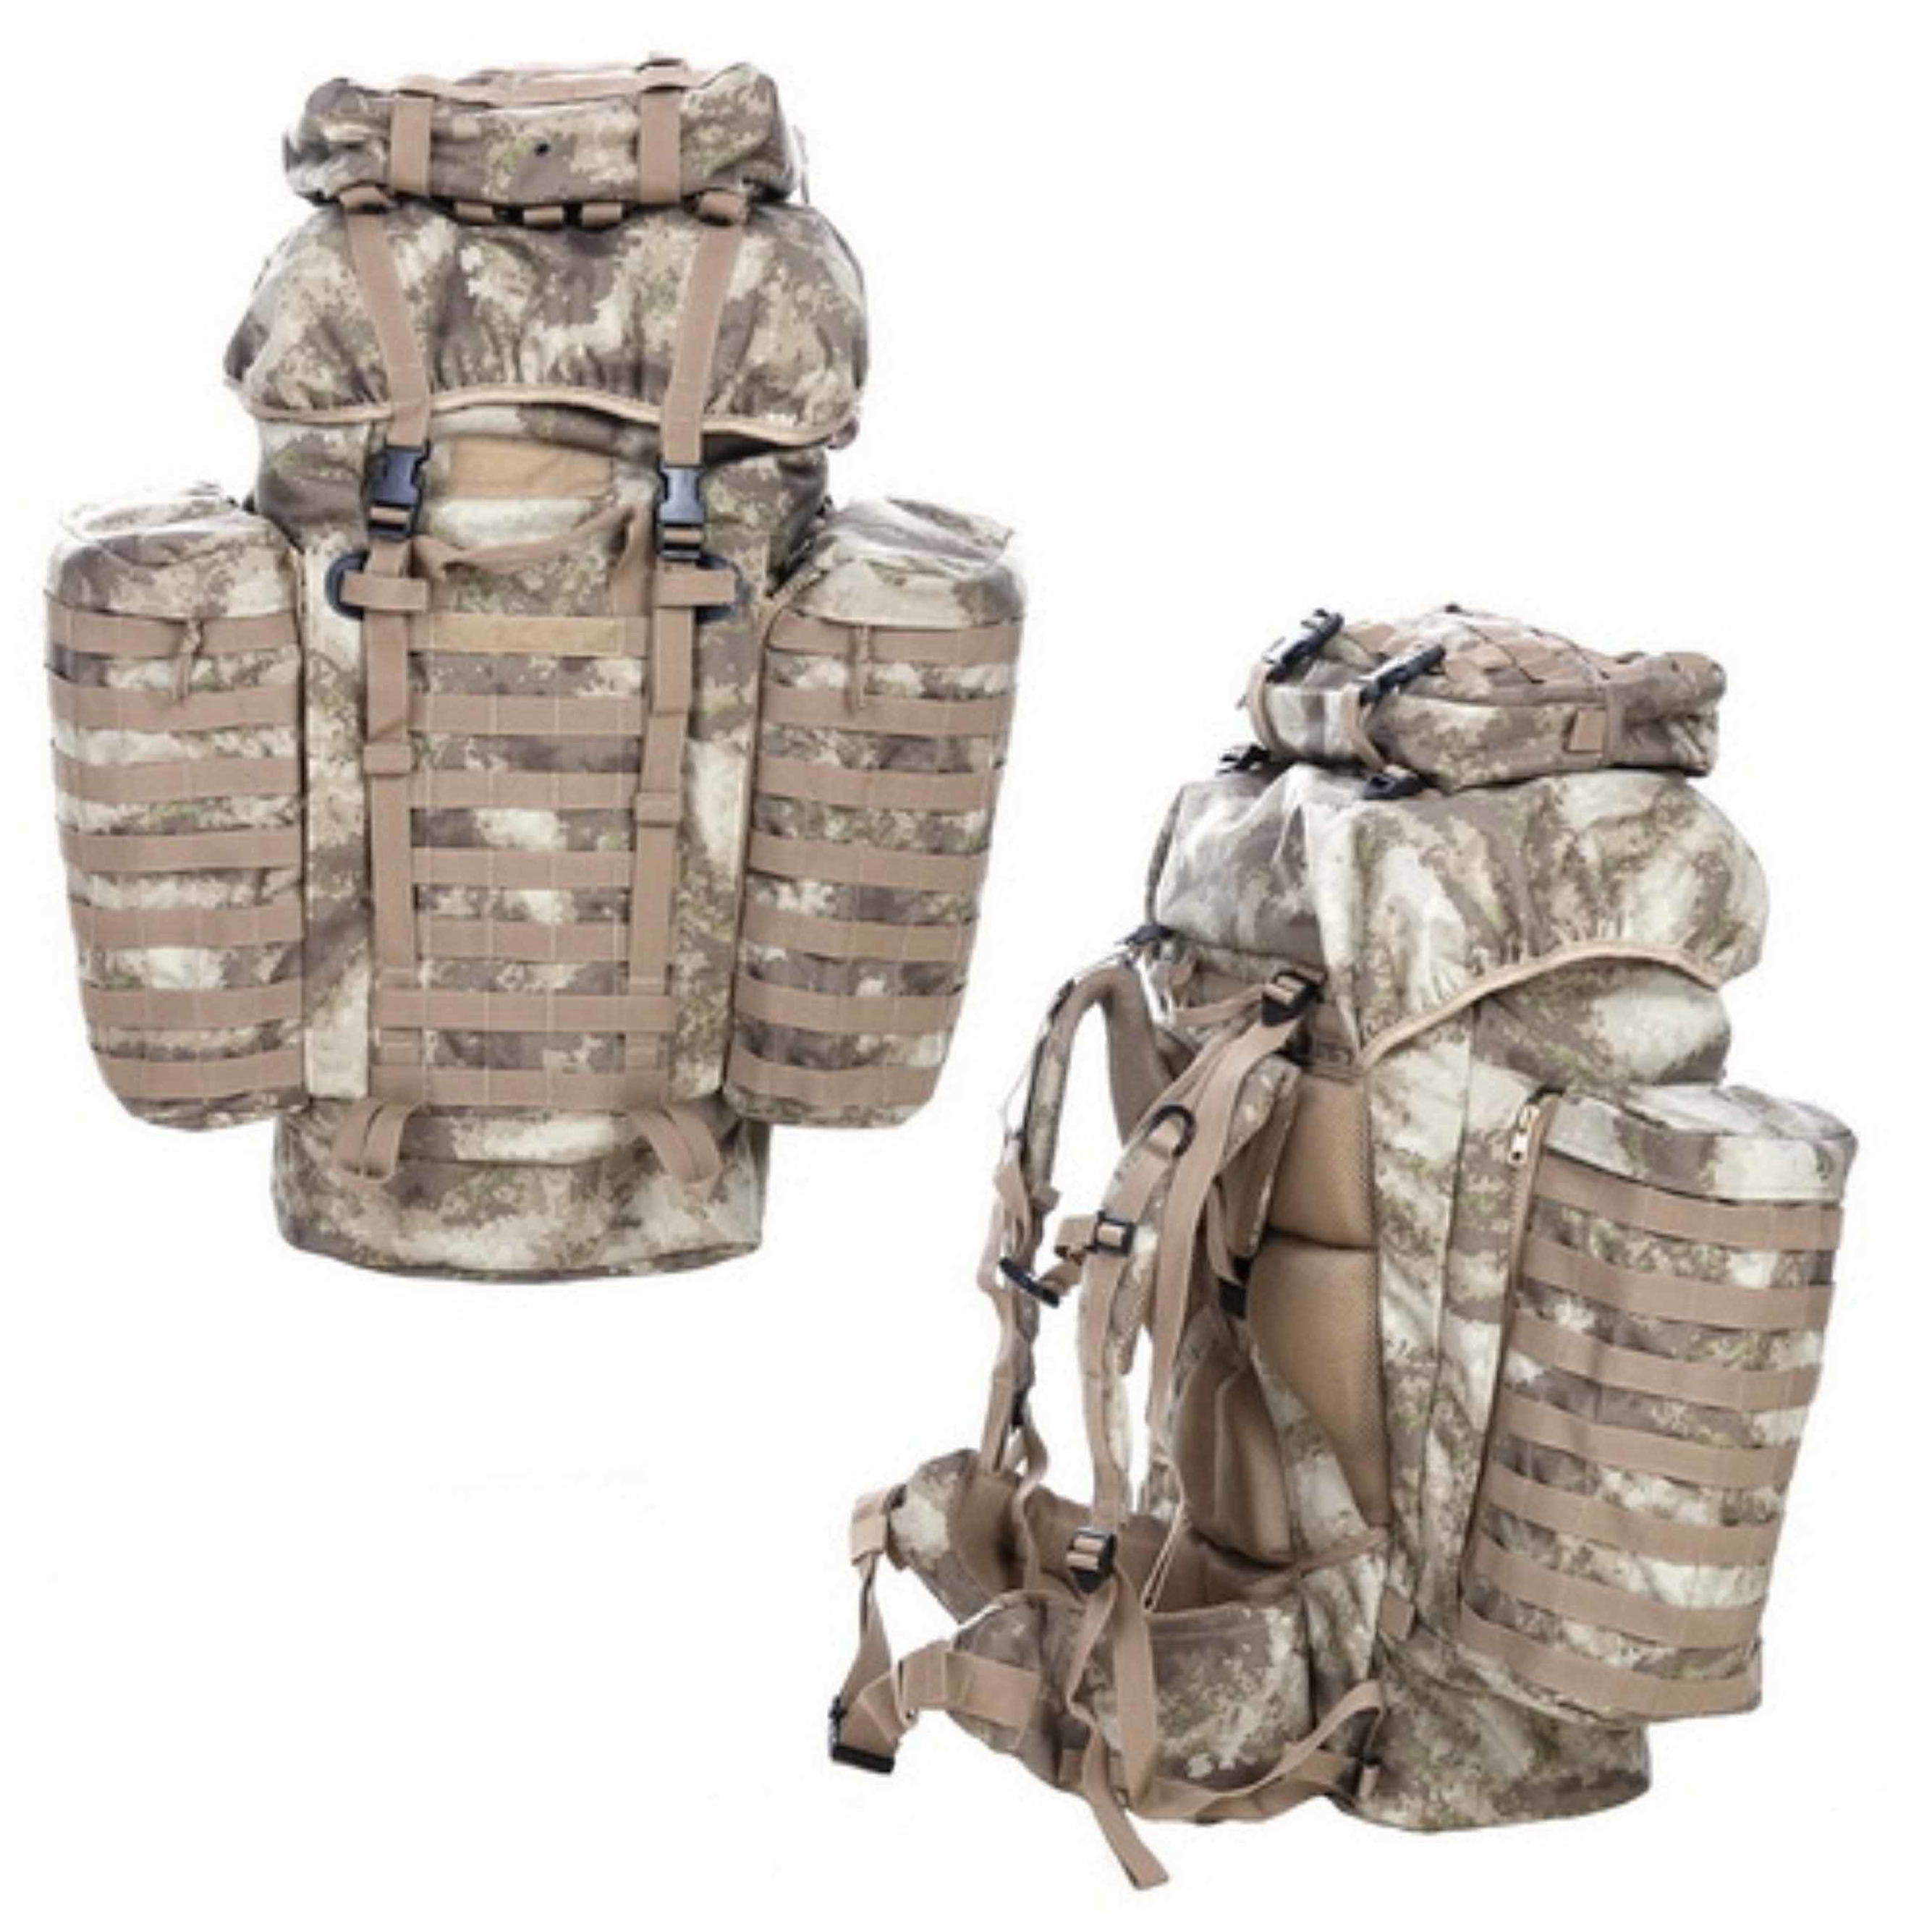 Survival backpack met MOLLE systeem